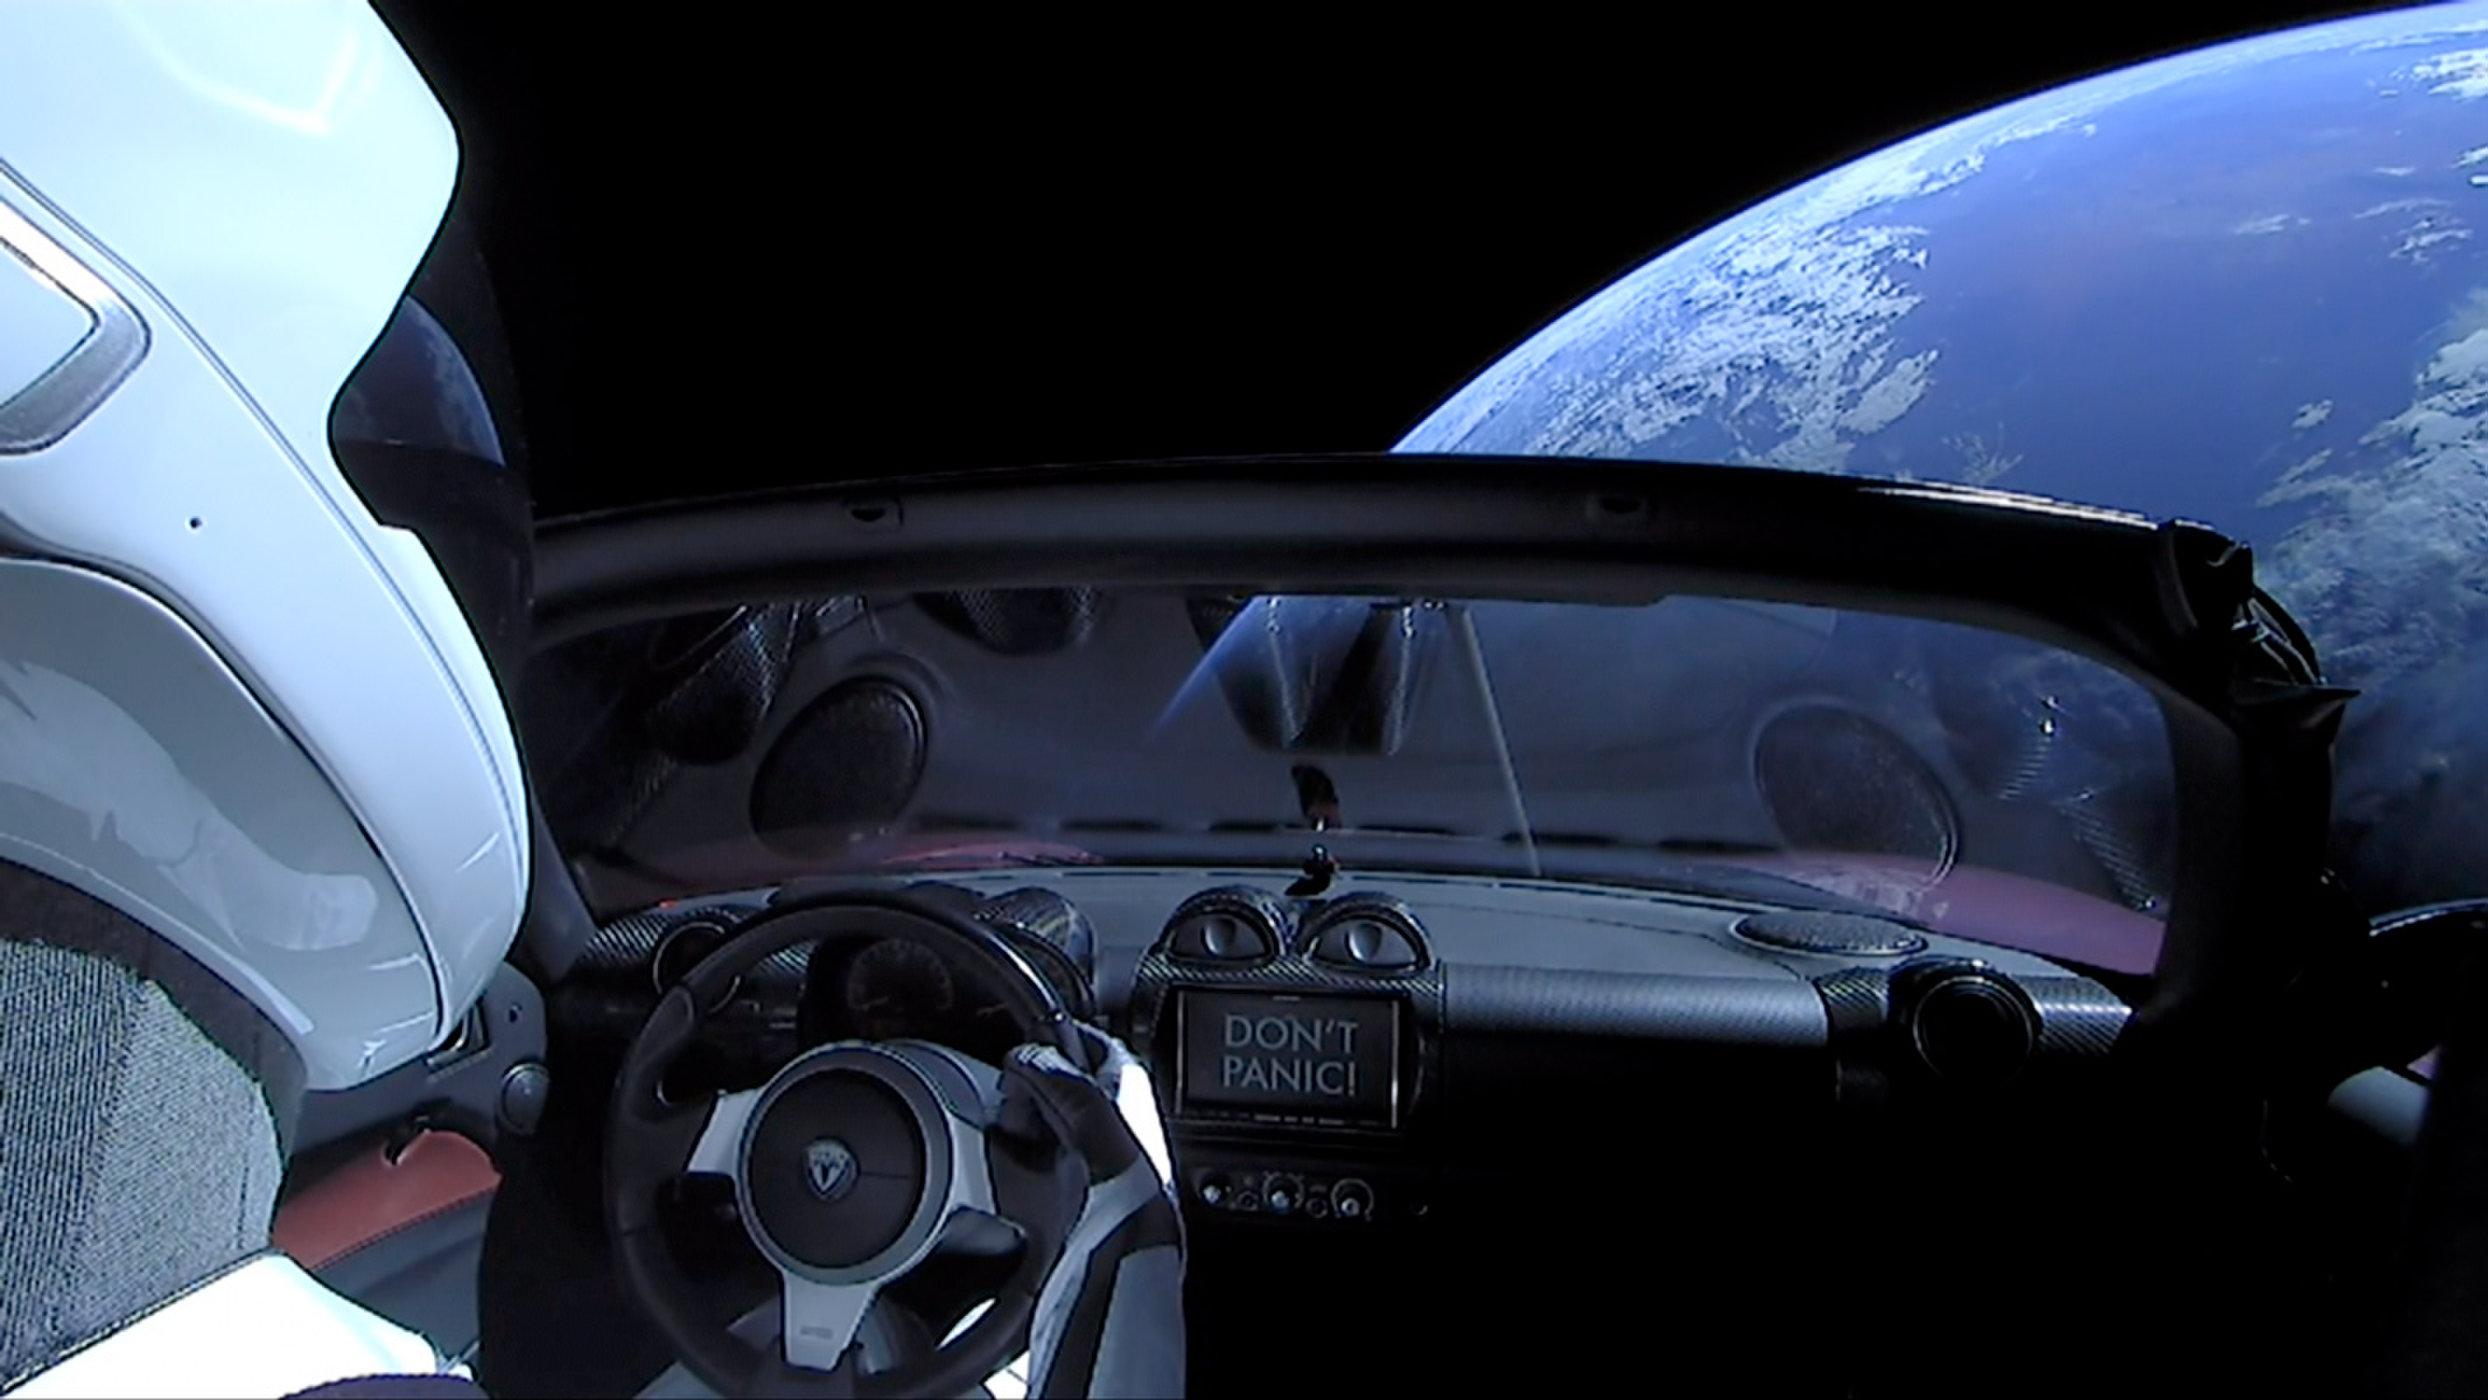 SpaceX's epic road trip photos Starman rides a Tesla roadster across